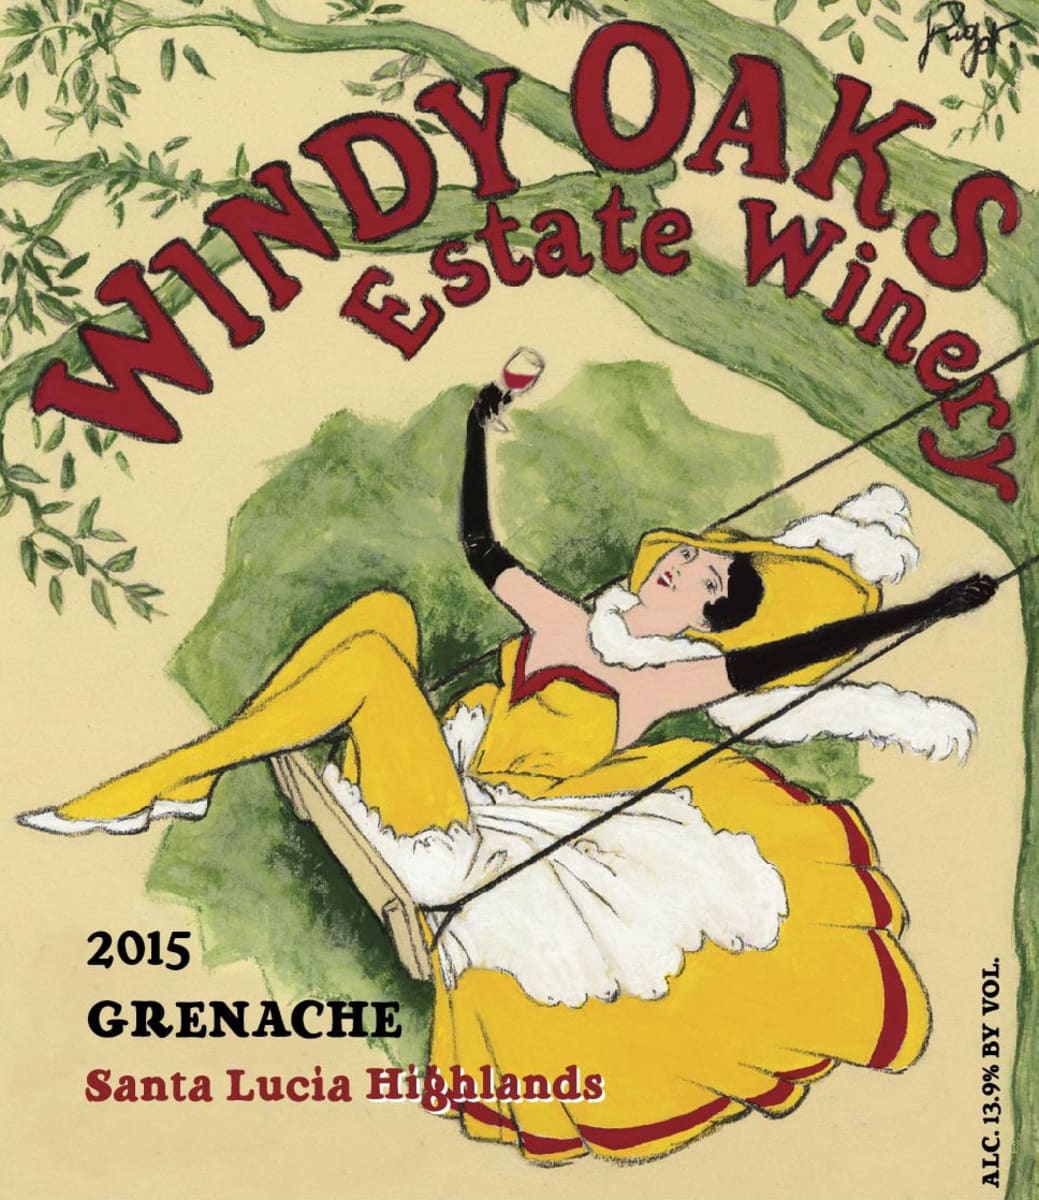 Windy Oaks Santa Lucia Highlands Grenache 2015  Front Label